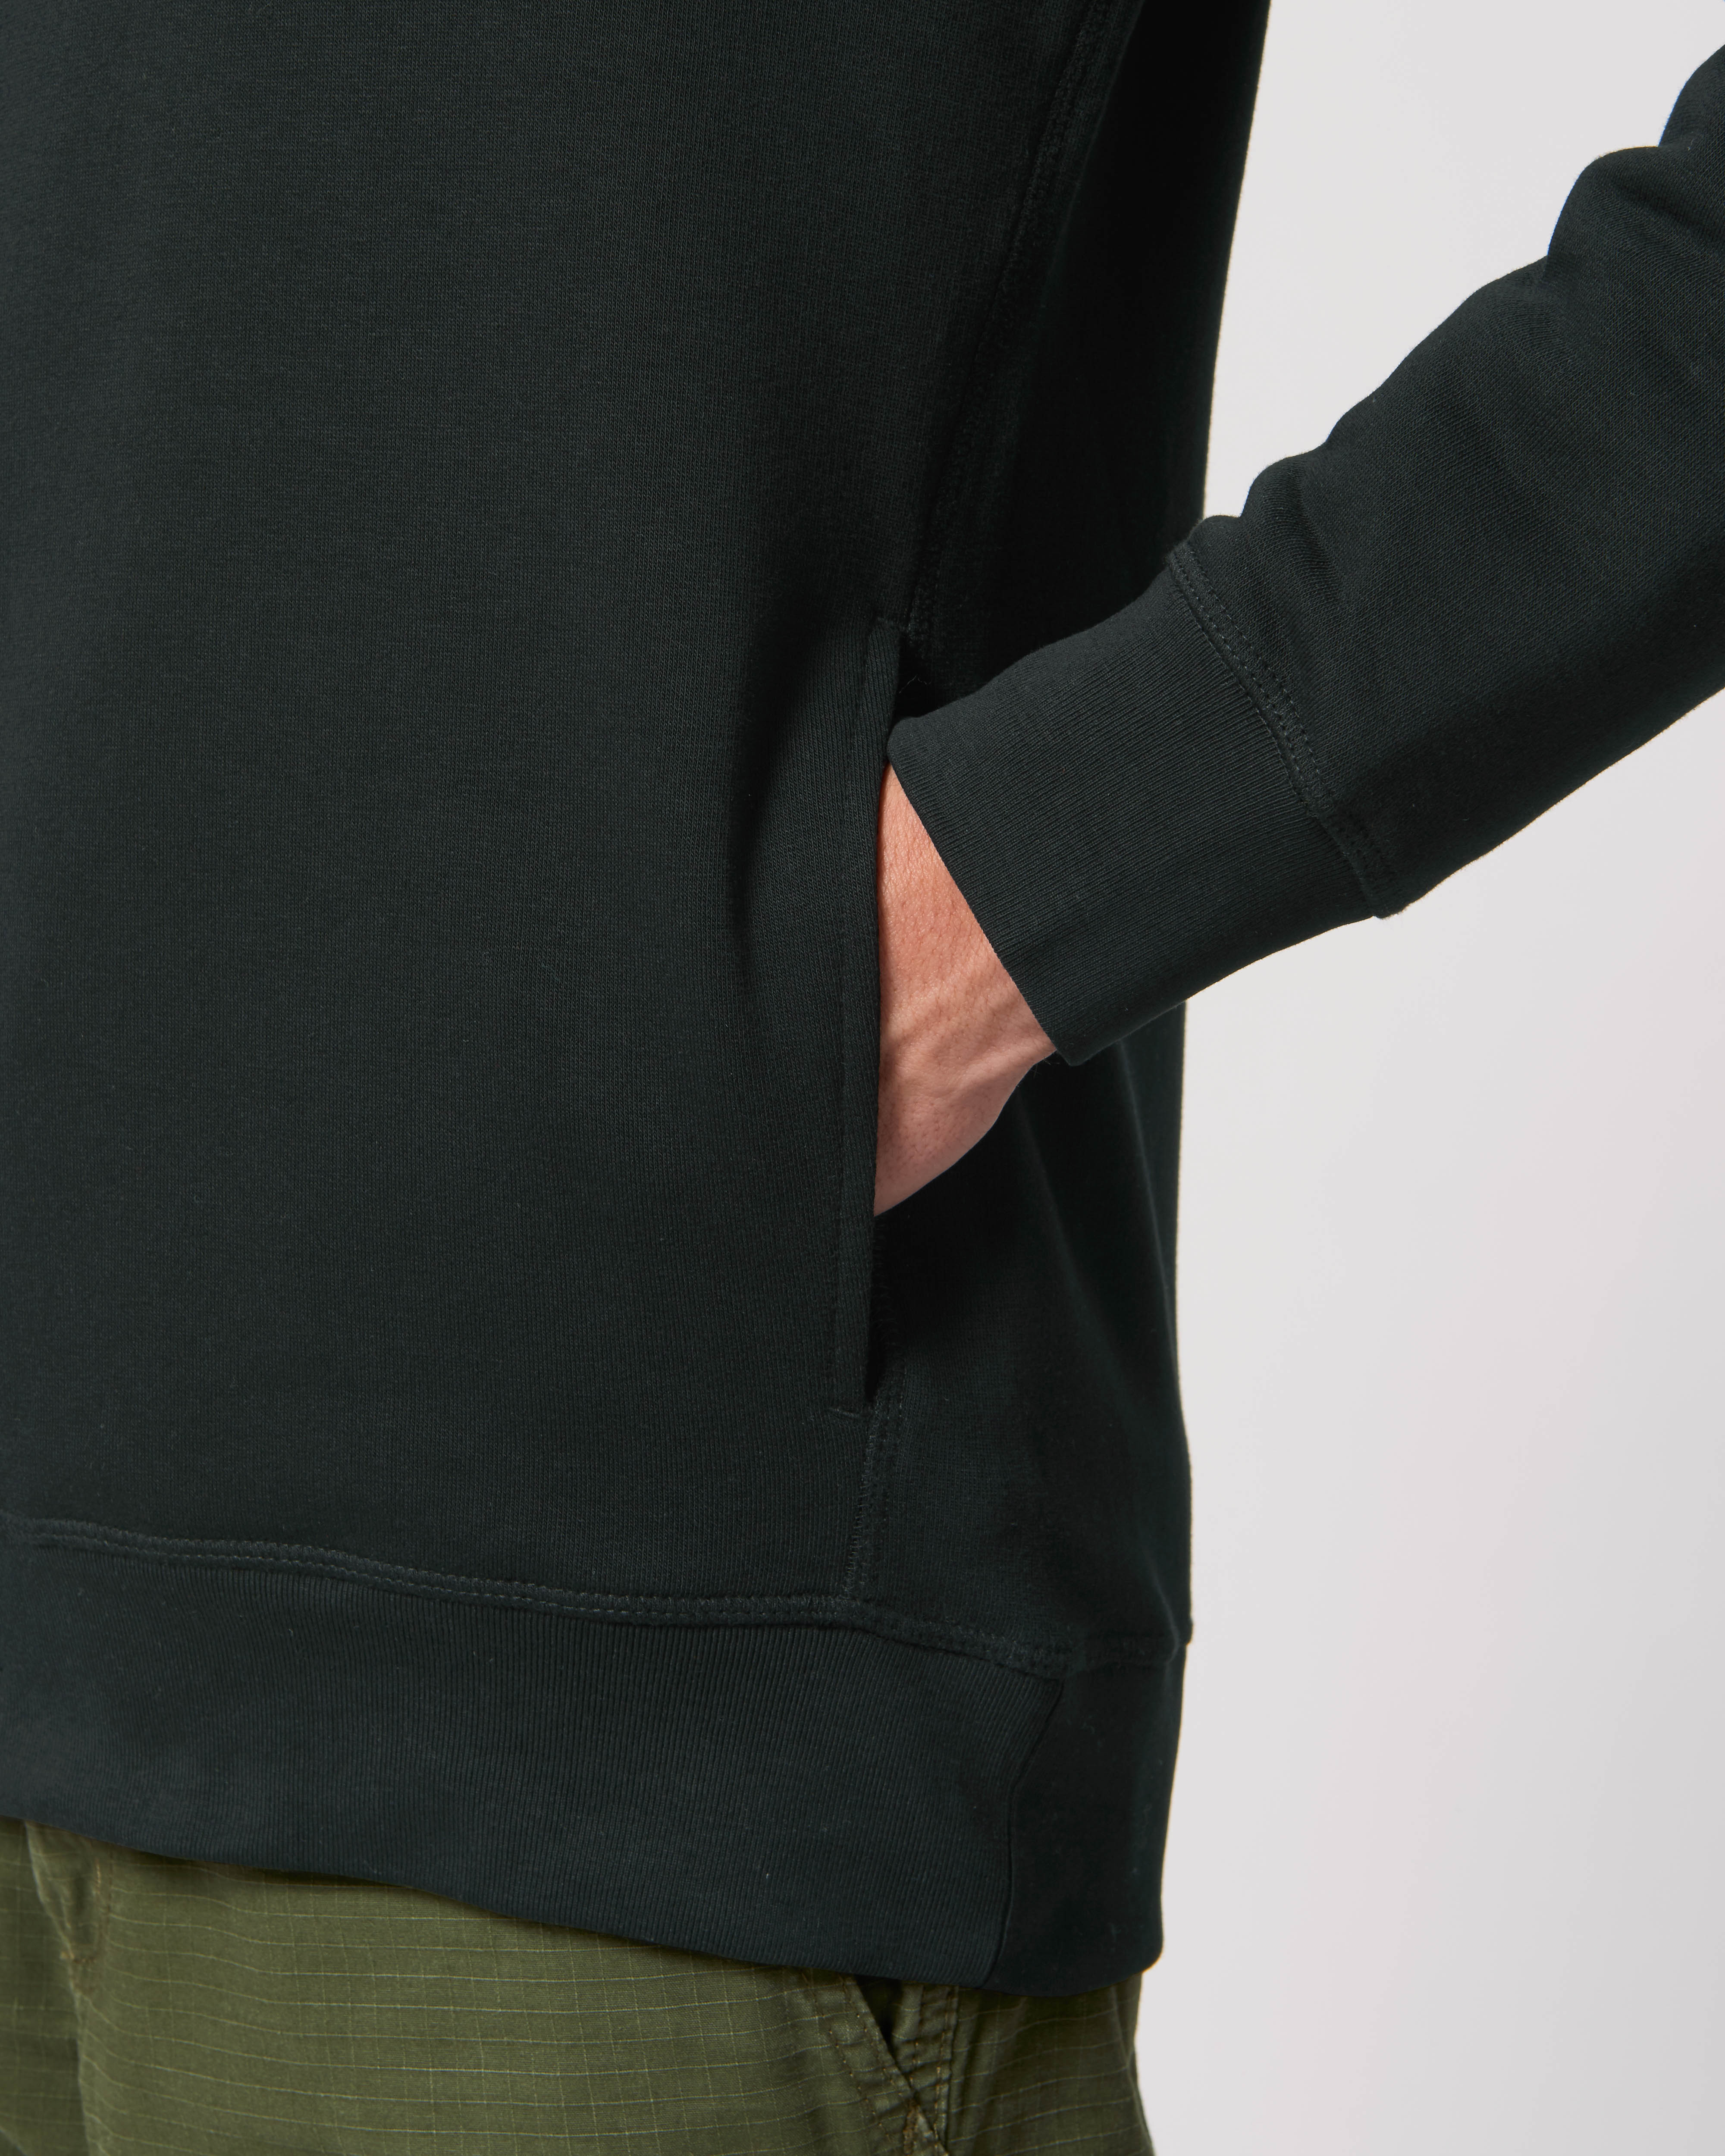 NERO Milano - Black - Unisex side-pocket Premium hoodie